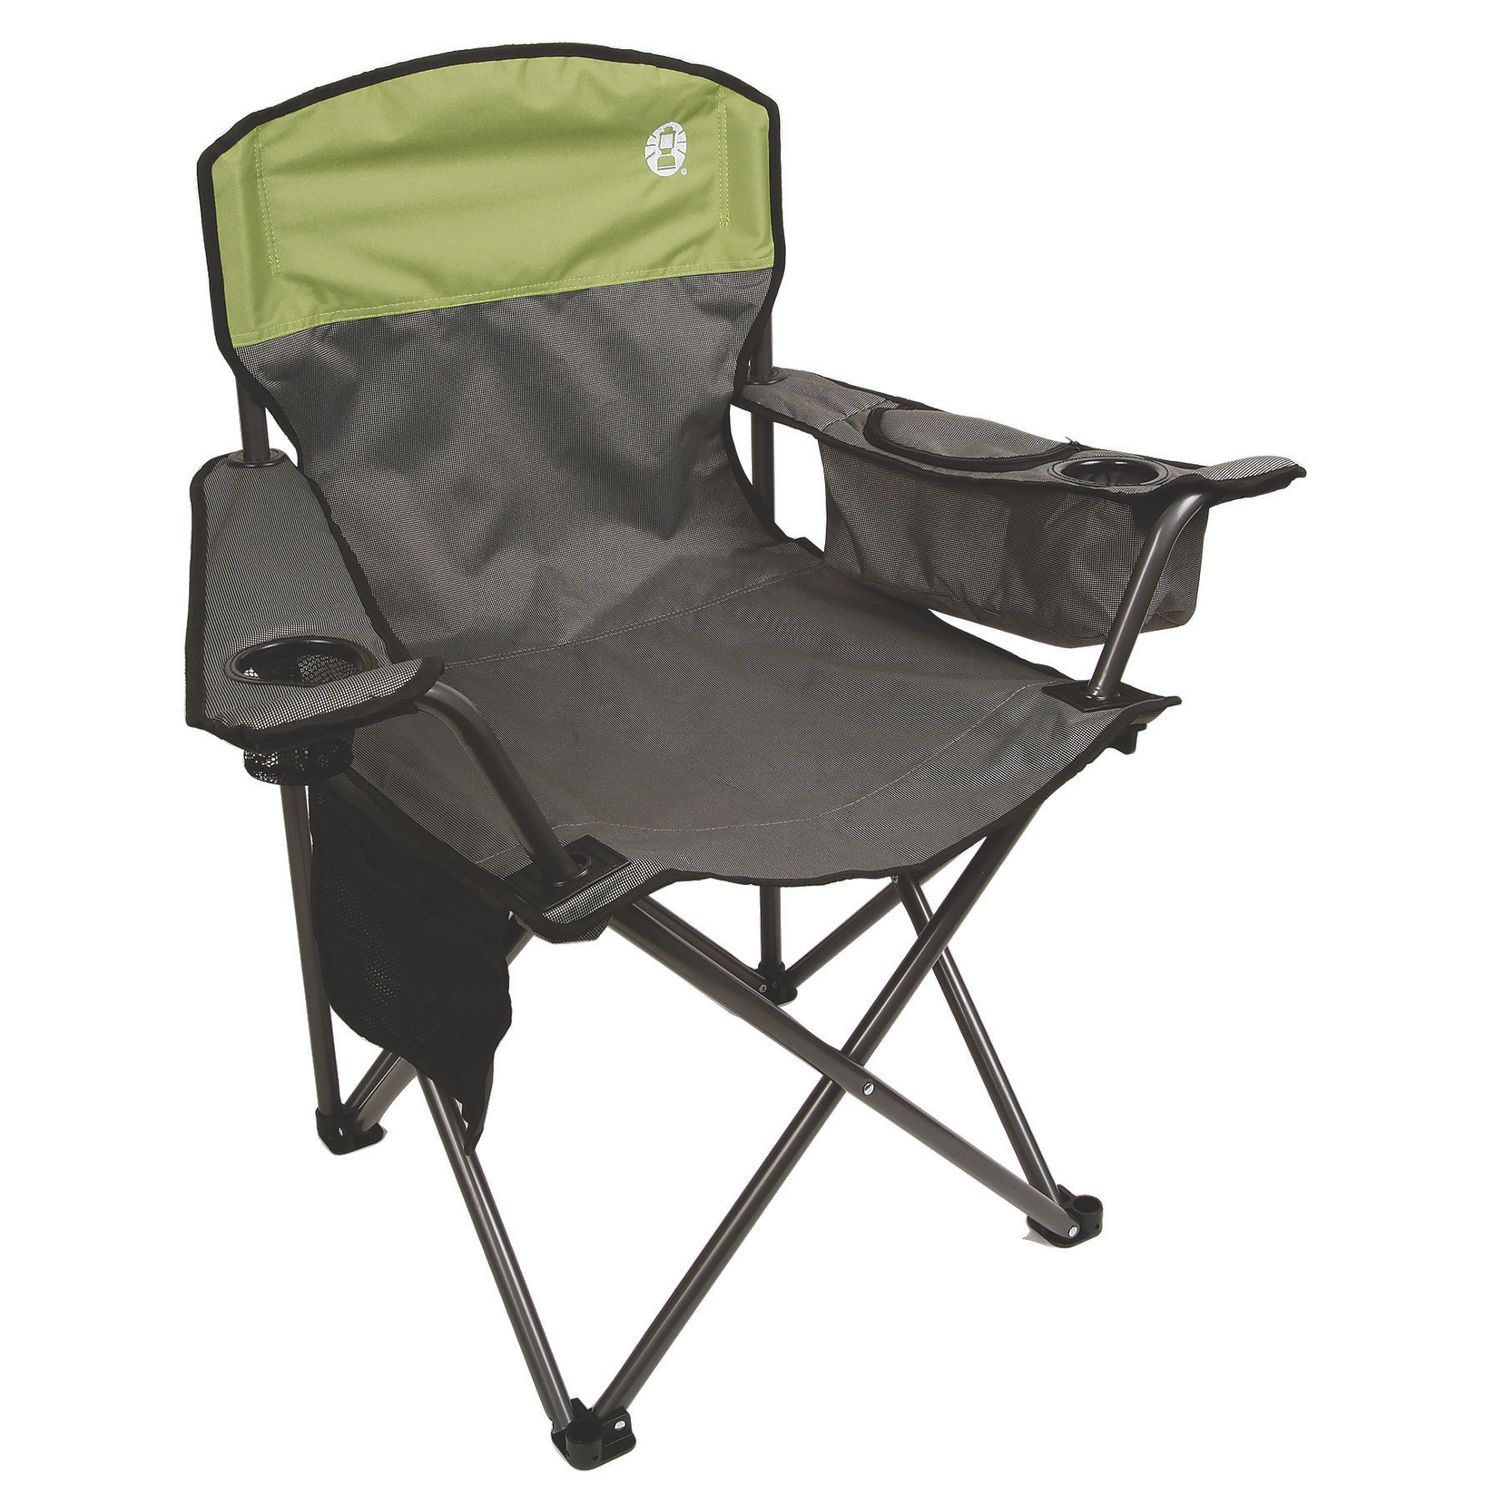 Coleman Oversized Cooler Quad Chair | Walmart Canada